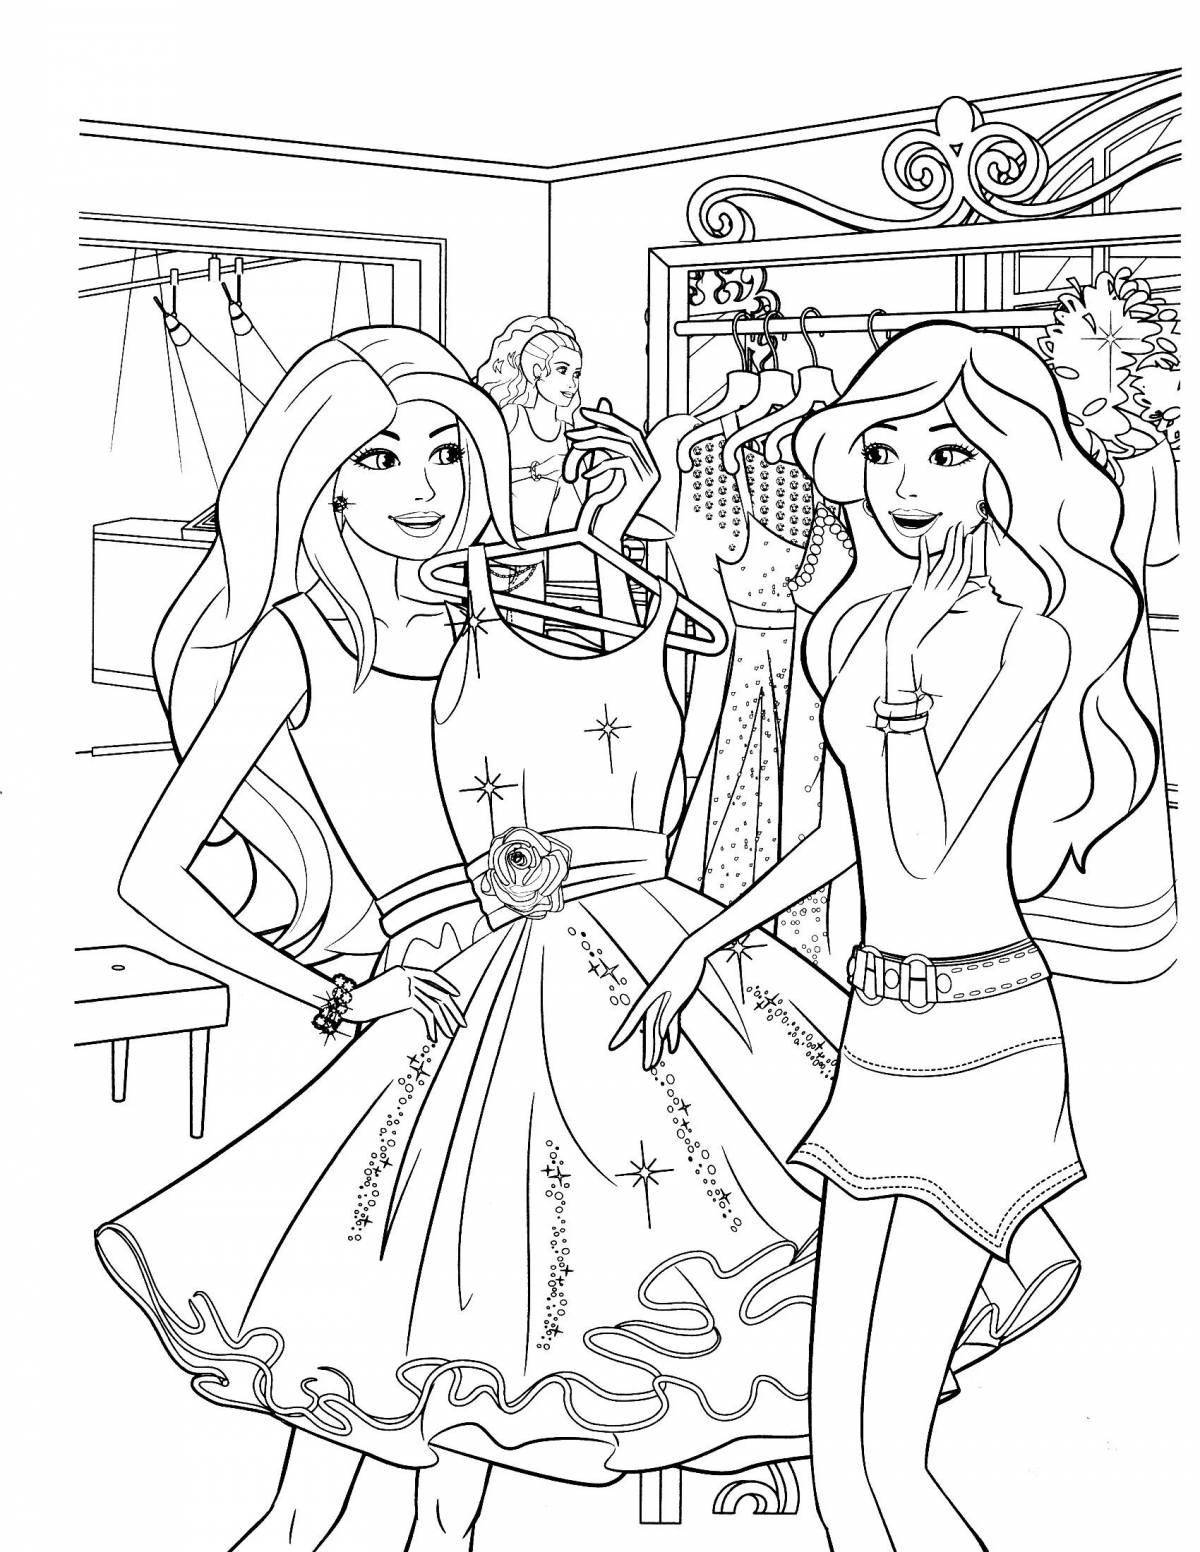 Splendid girls shop coloring page